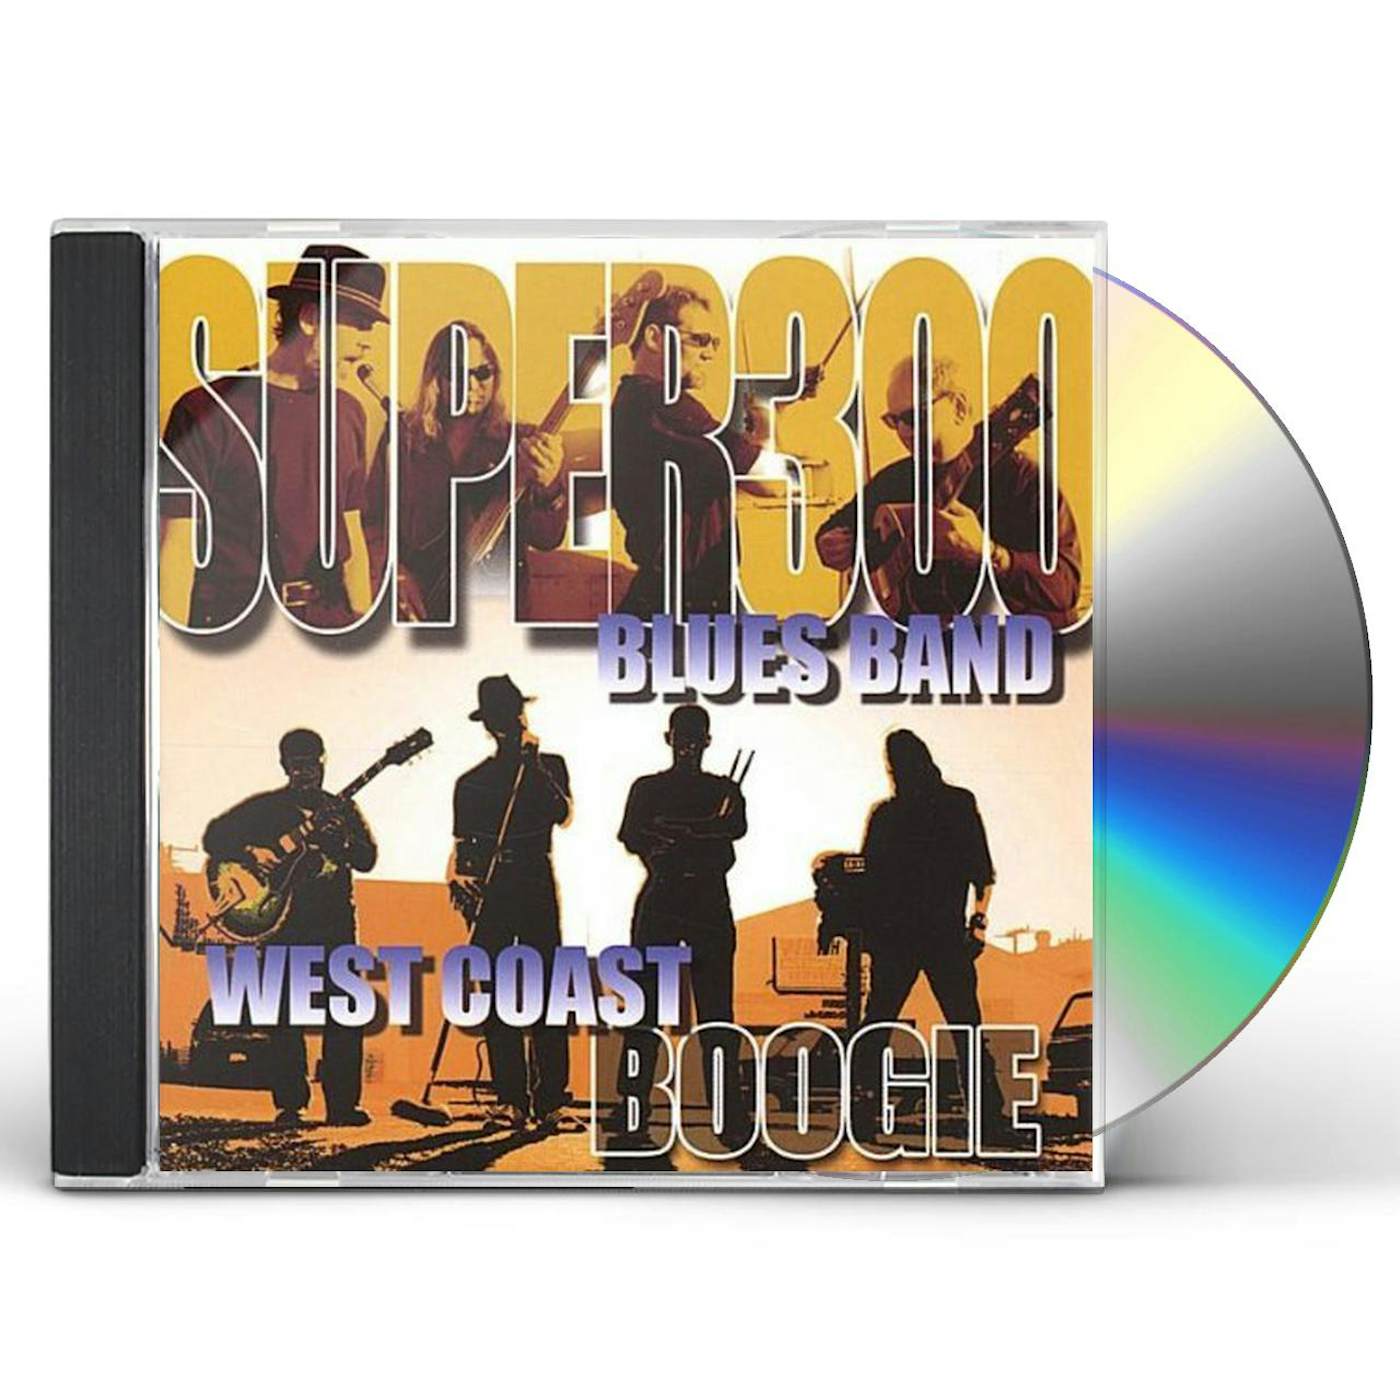 Super Super Blues Band WEST COAST BOOGIE CD